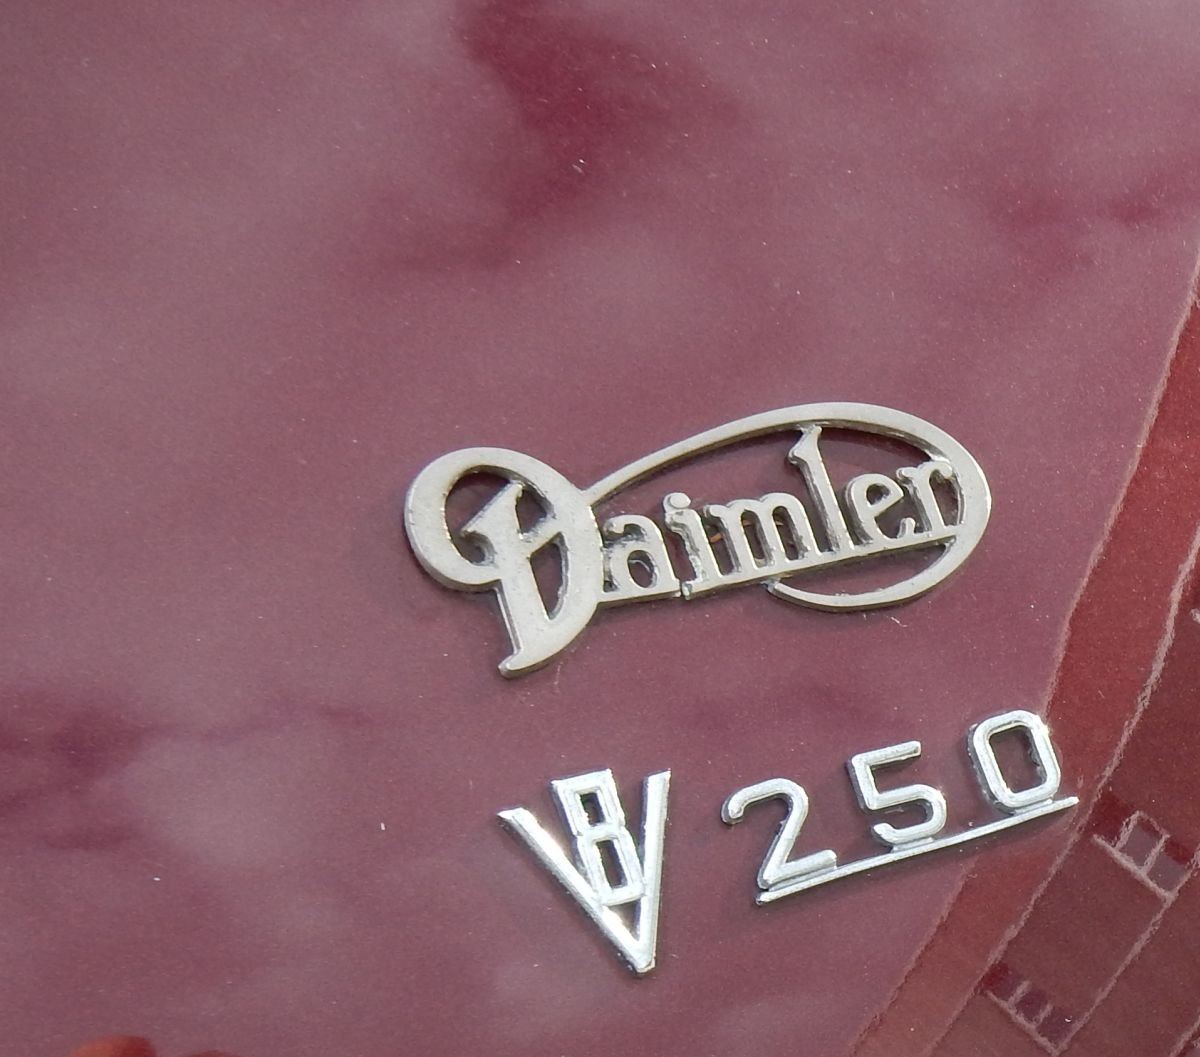 Daimler 250 azpqlk44trswpgjwplgbh